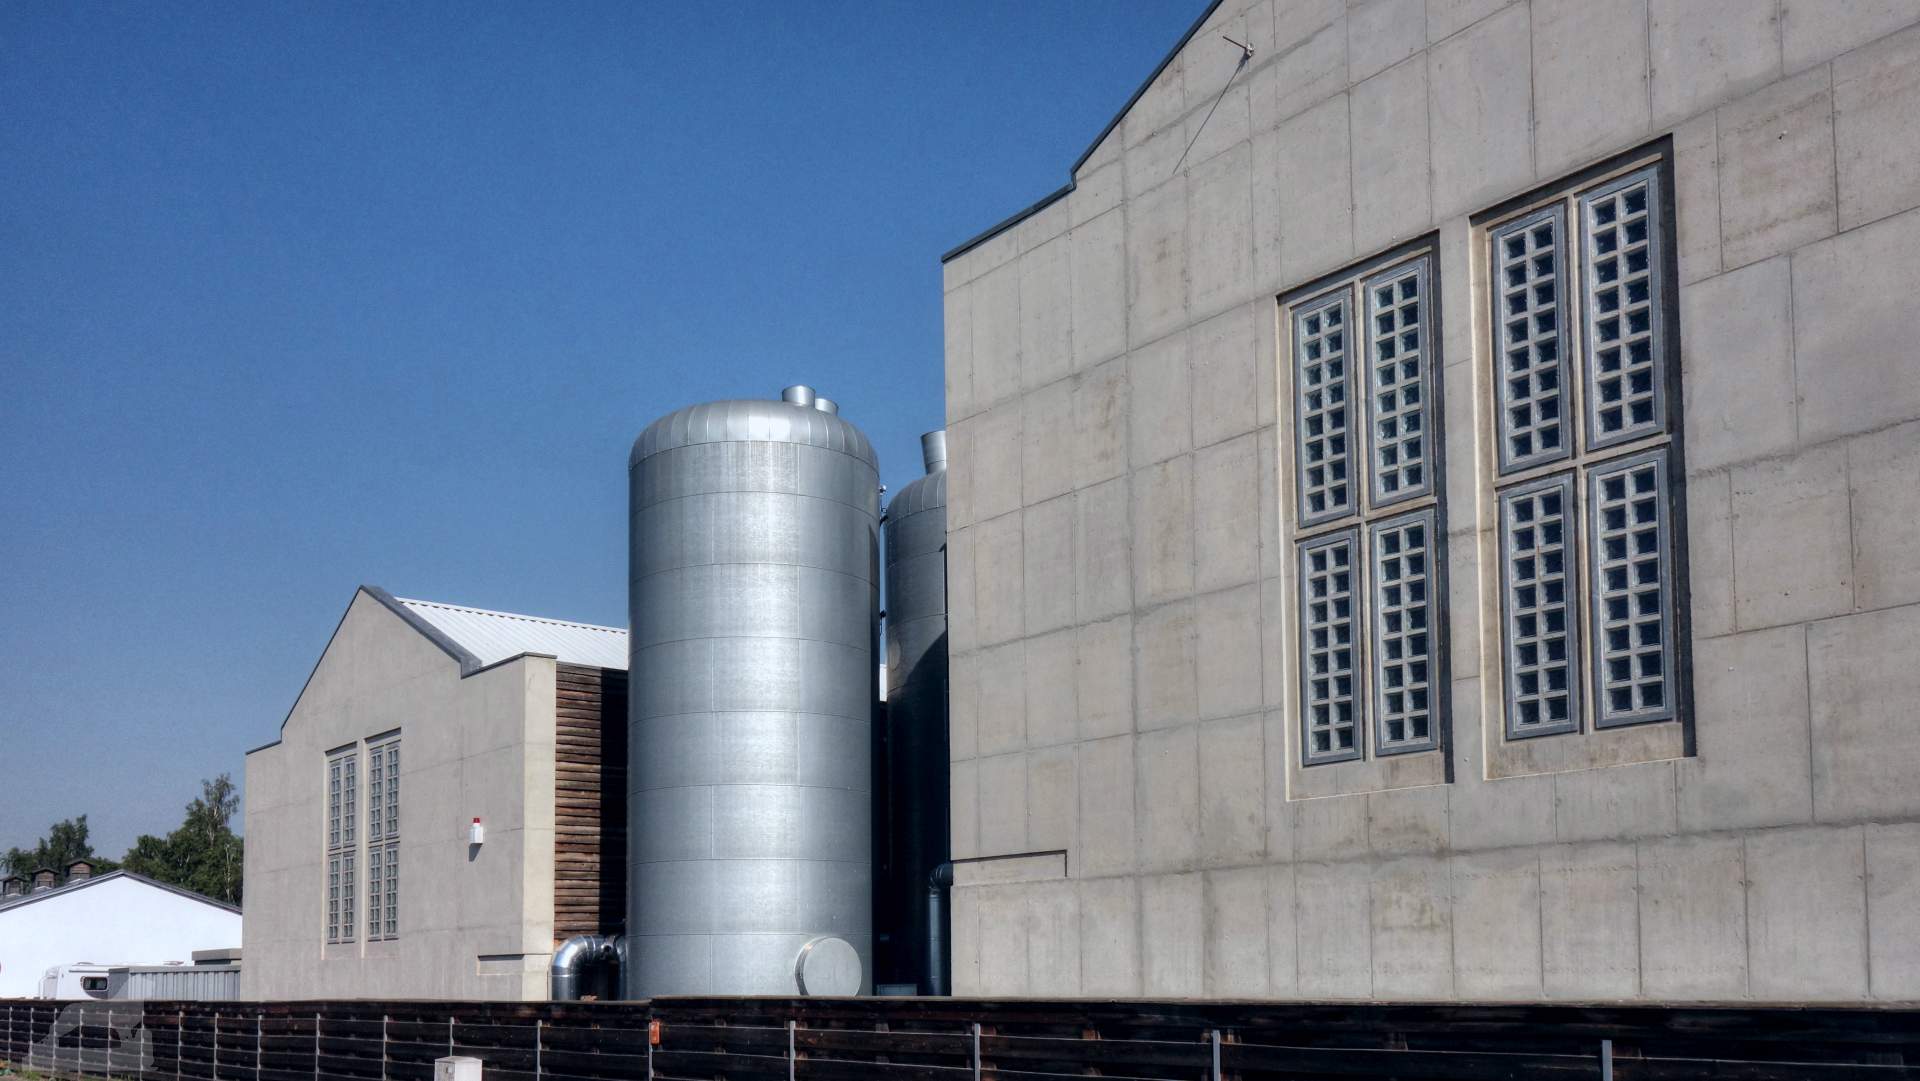 Biomasse-Heizkraftwerk am Hungerkamp